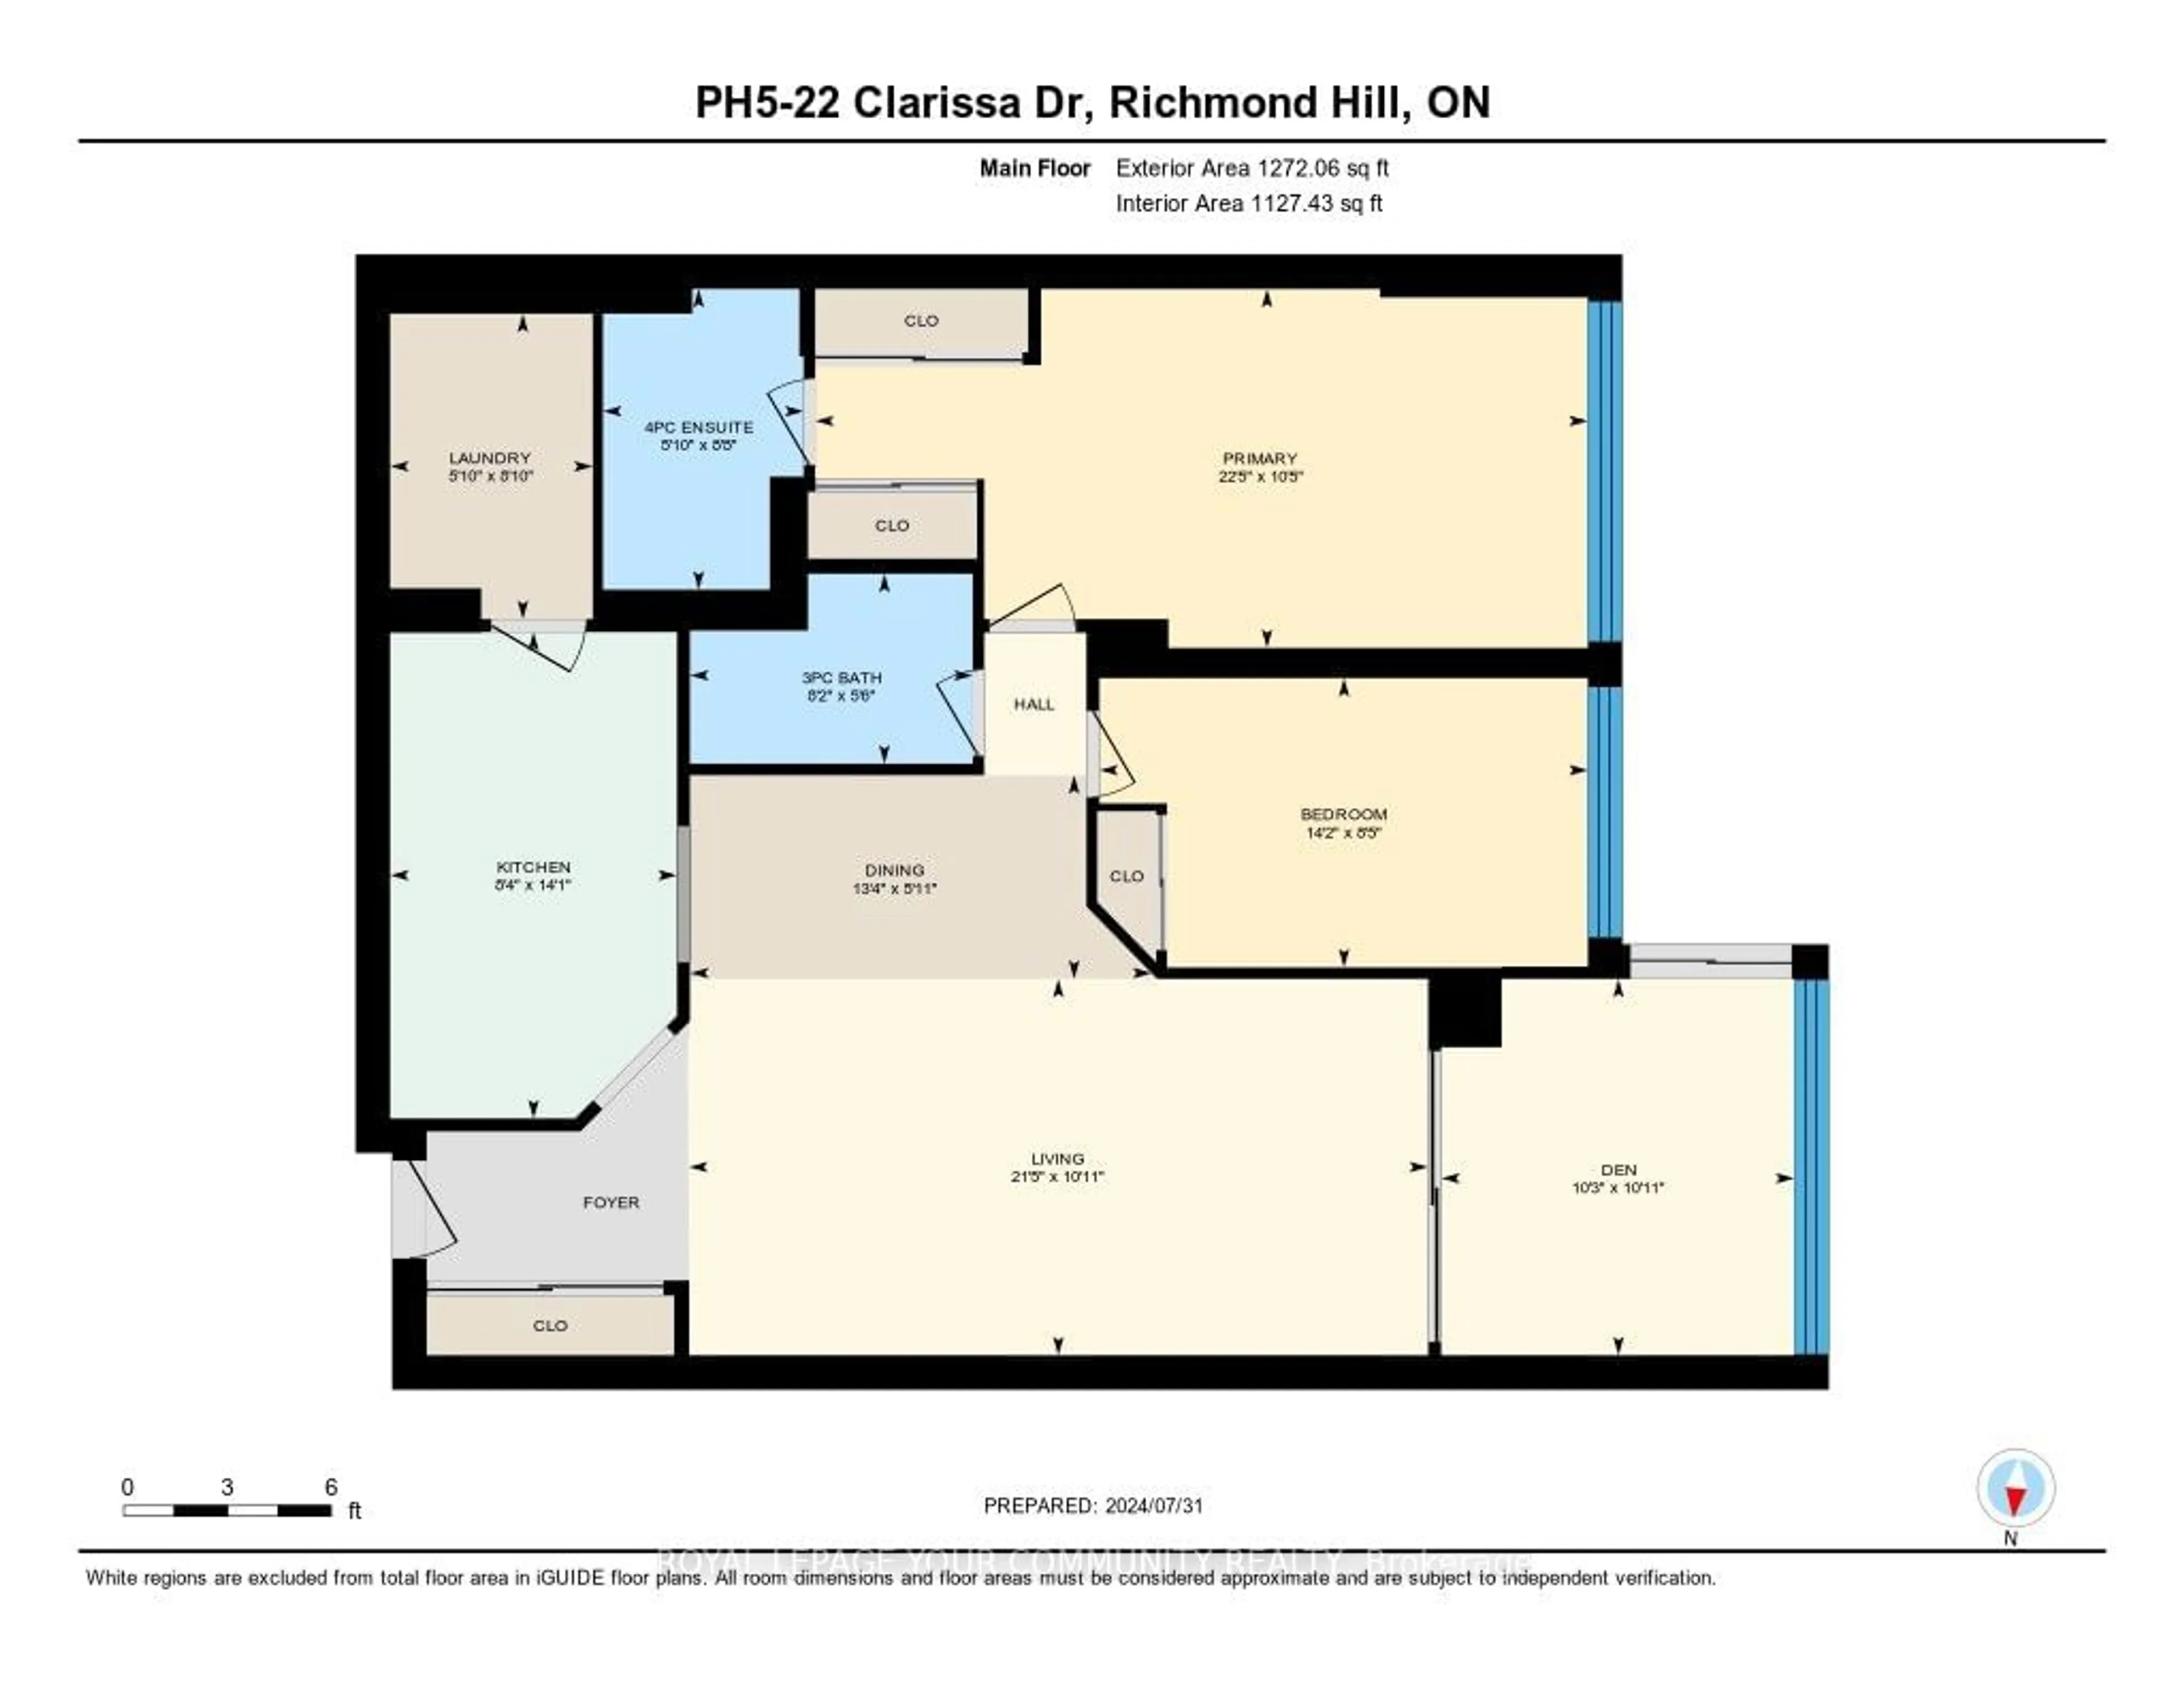 Floor plan for 22 Clarissa Dr #PH 5, Richmond Hill Ontario L4C 9R6